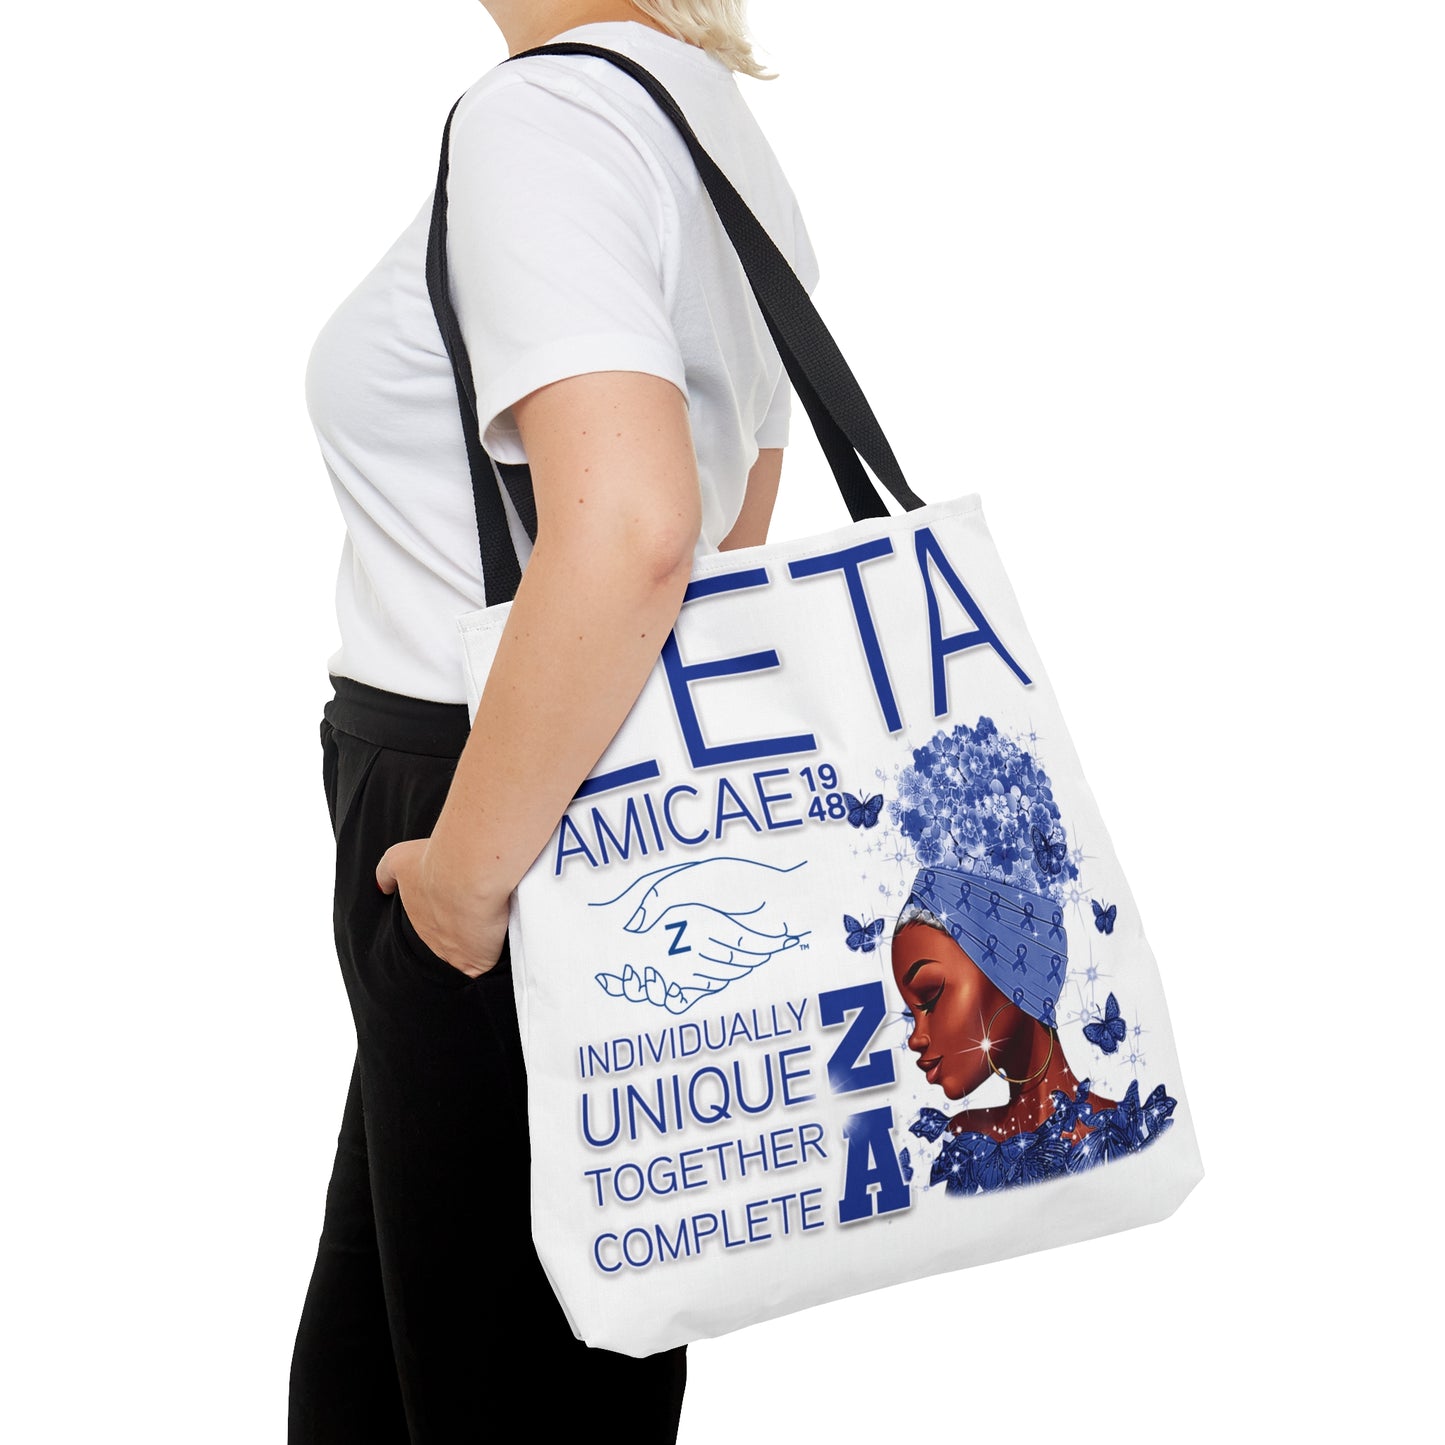 Tote Bag ~ Zeta Amicae Wraps, Words & Butterflies Tote Bag